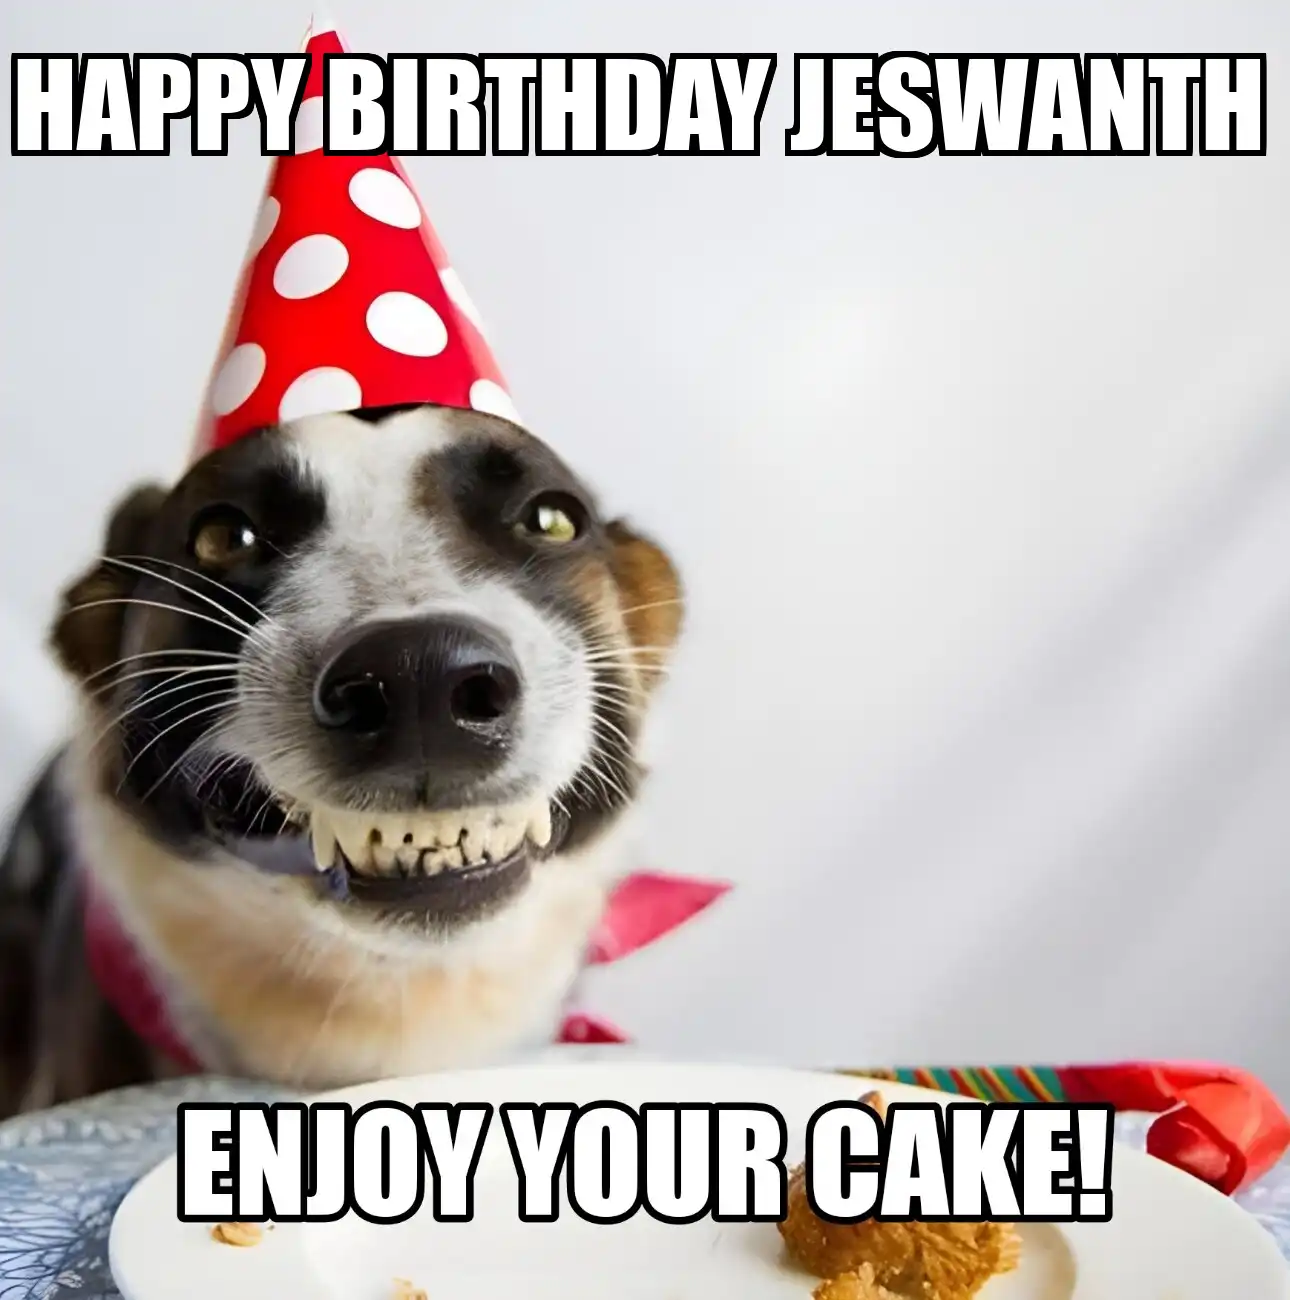 Happy Birthday Jeswanth Enjoy Your Cake Dog Meme